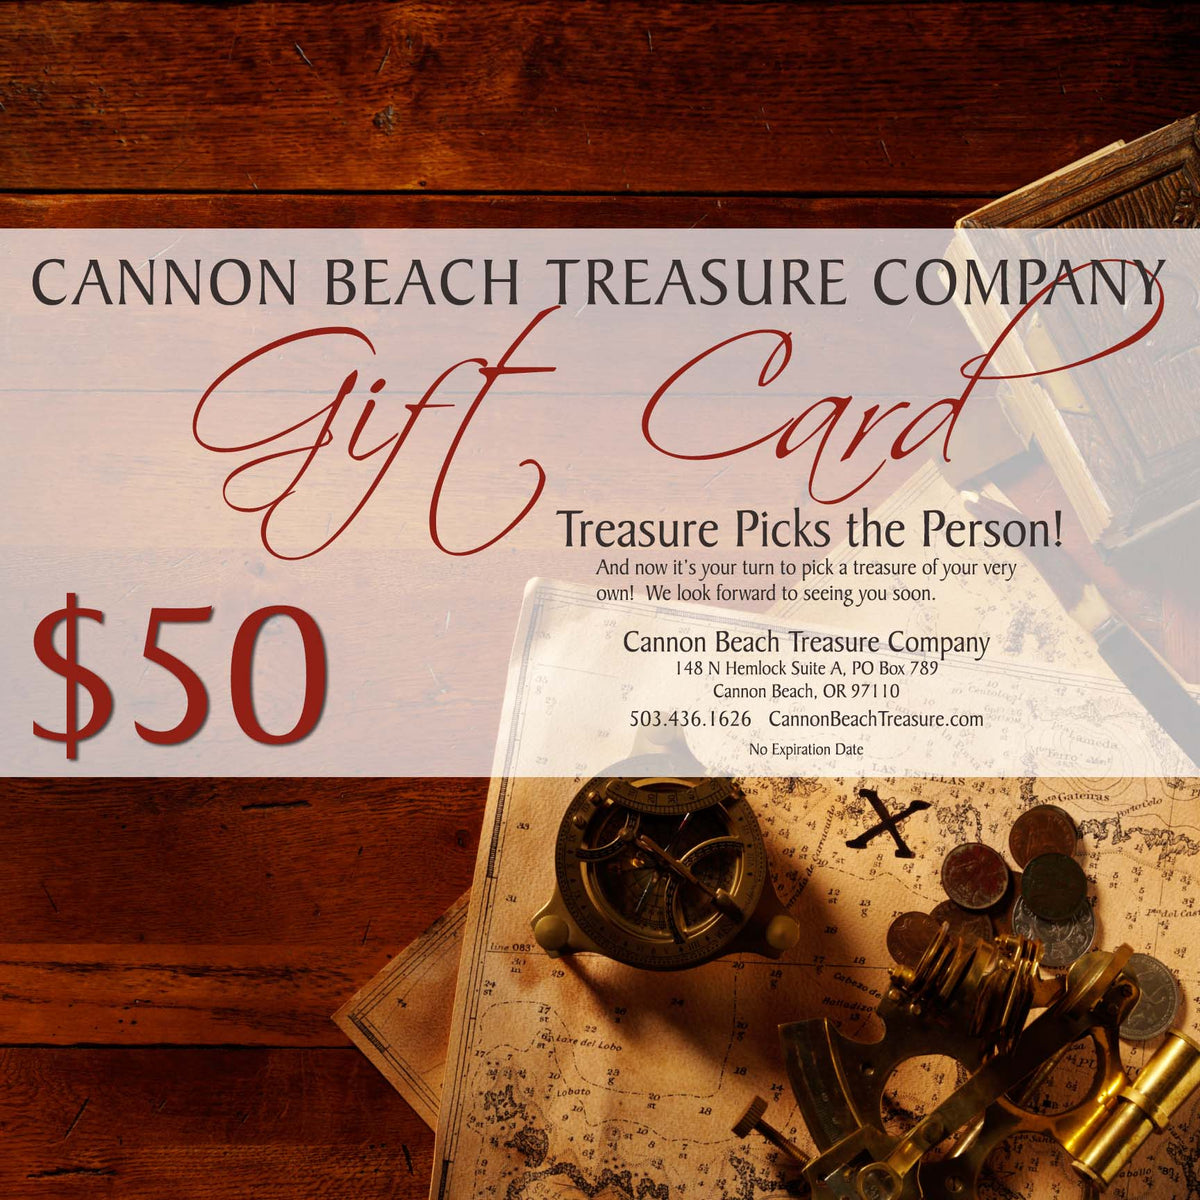 Cannon Beach Treasure Company Gift Card $50